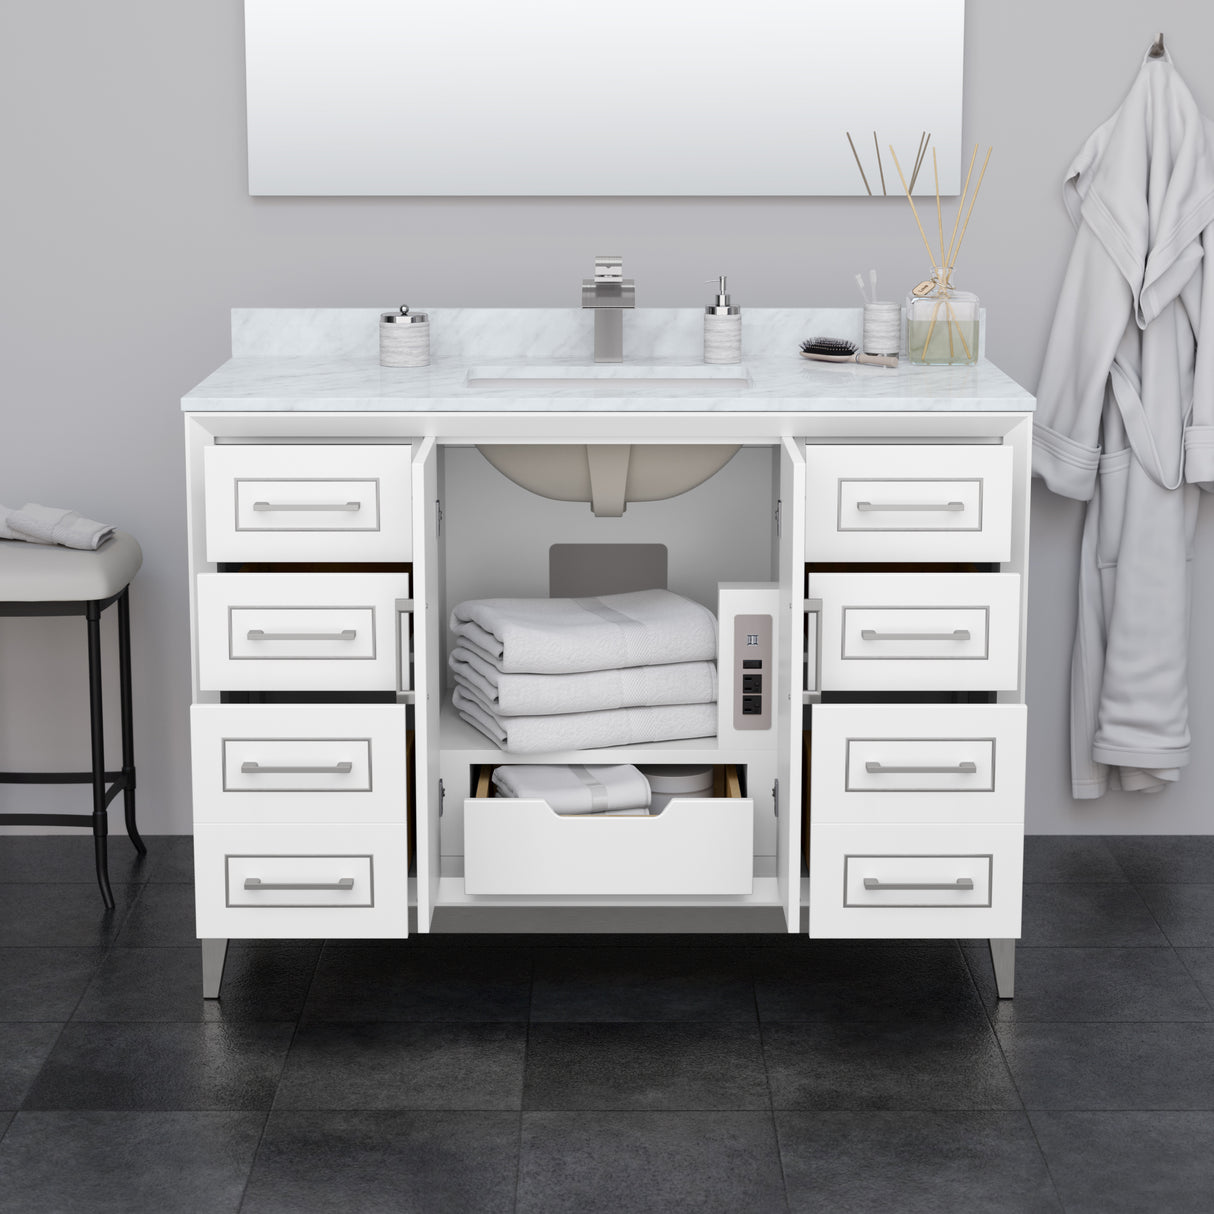 Marlena 48 Inch Single Bathroom Vanity in White Carrara Cultured Marble Countertop Undermount Square Sink Satin Bronze Trim